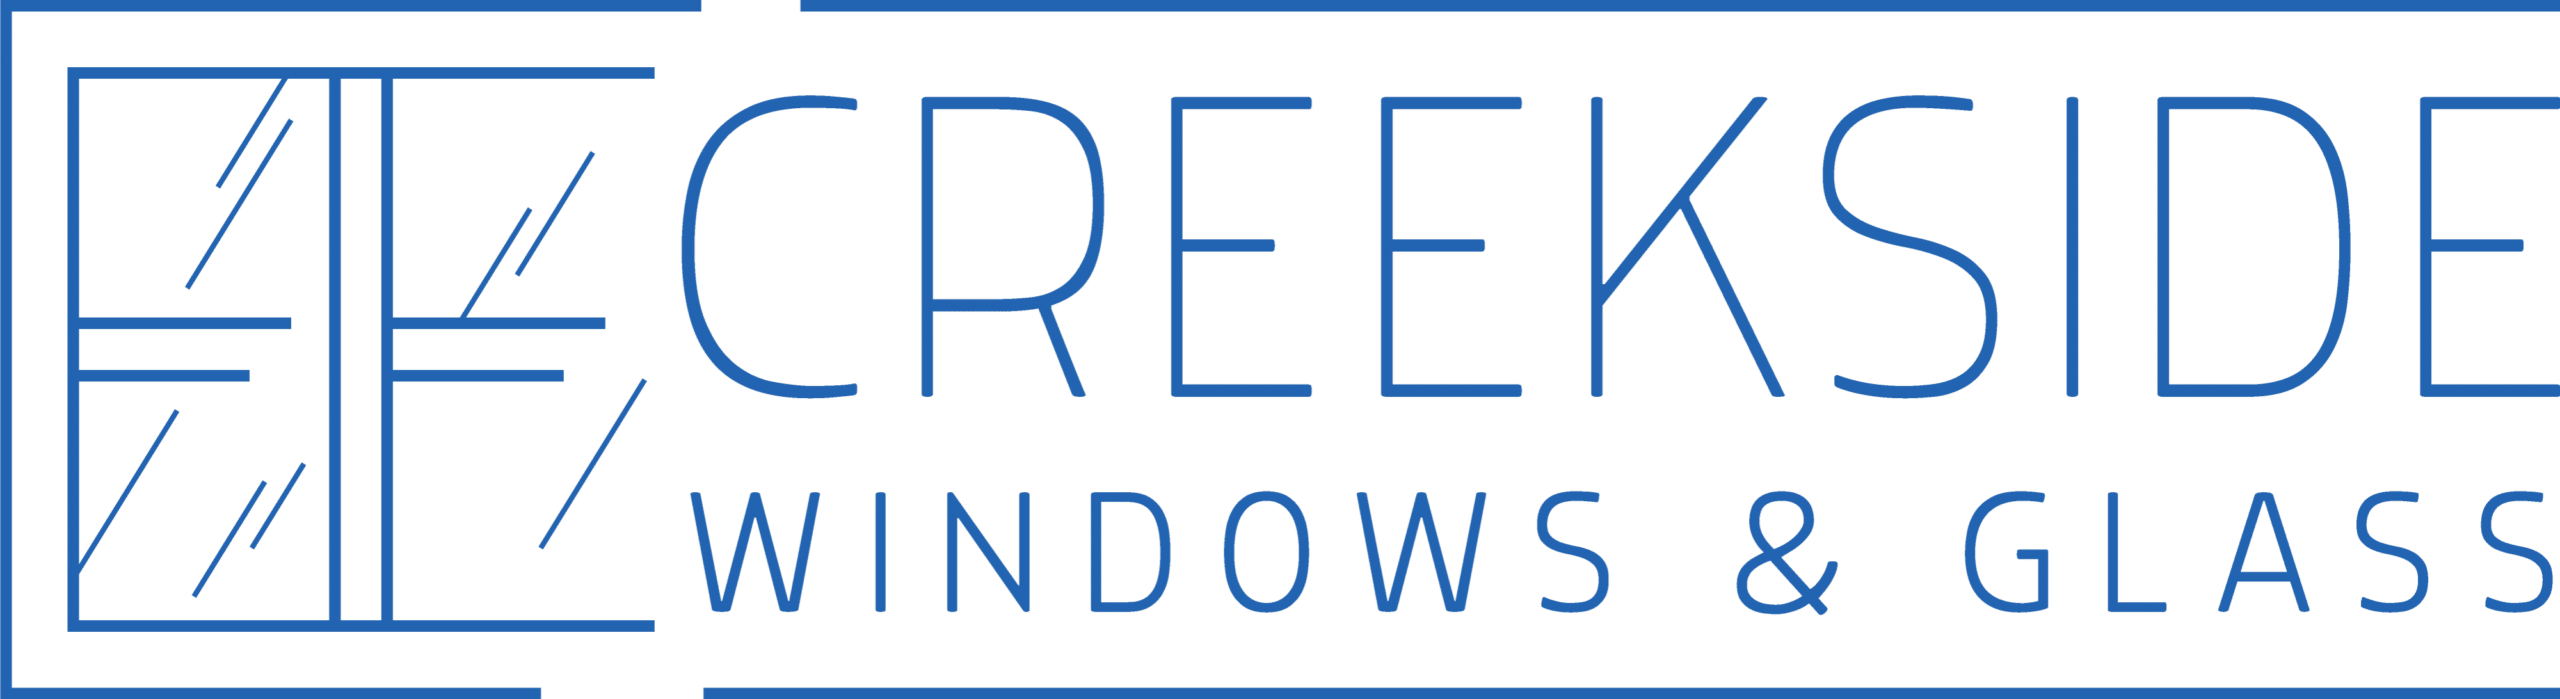 Creekside Windows and Glass Blue logo